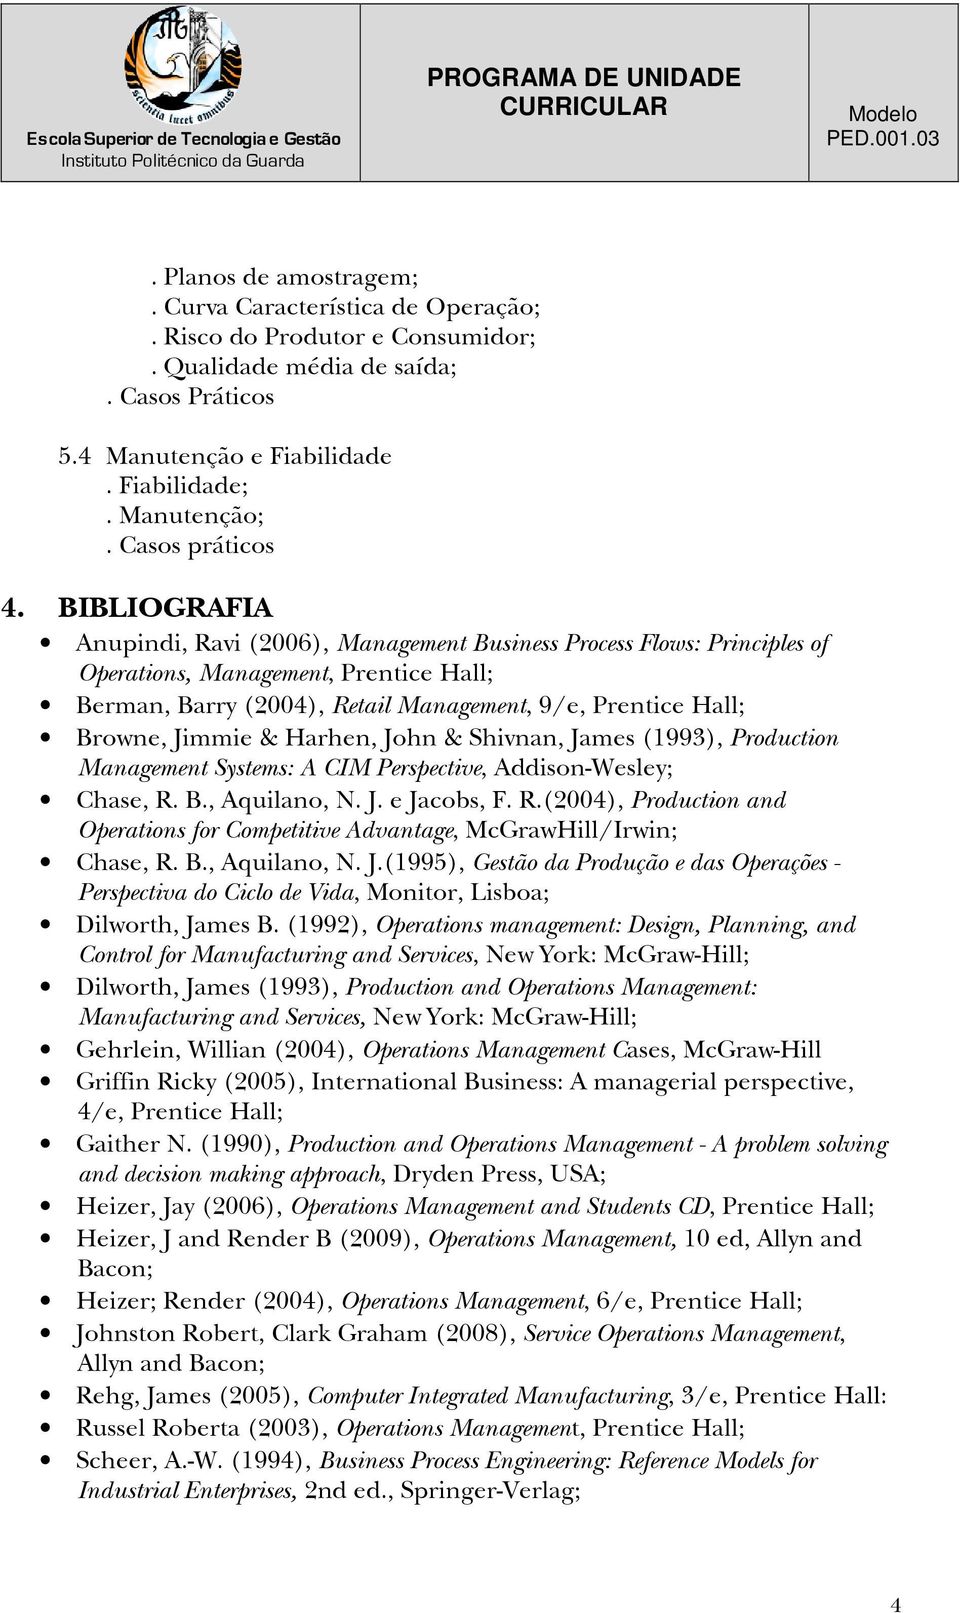 BIBLIOGRAFIA Anupindi, Ravi (2006), Management Business Process Flows: Principles of Operations, Management, Prentice Hall; Berman, Barry (2004), Retail Management, 9/e, Prentice Hall; Browne, Jimmie